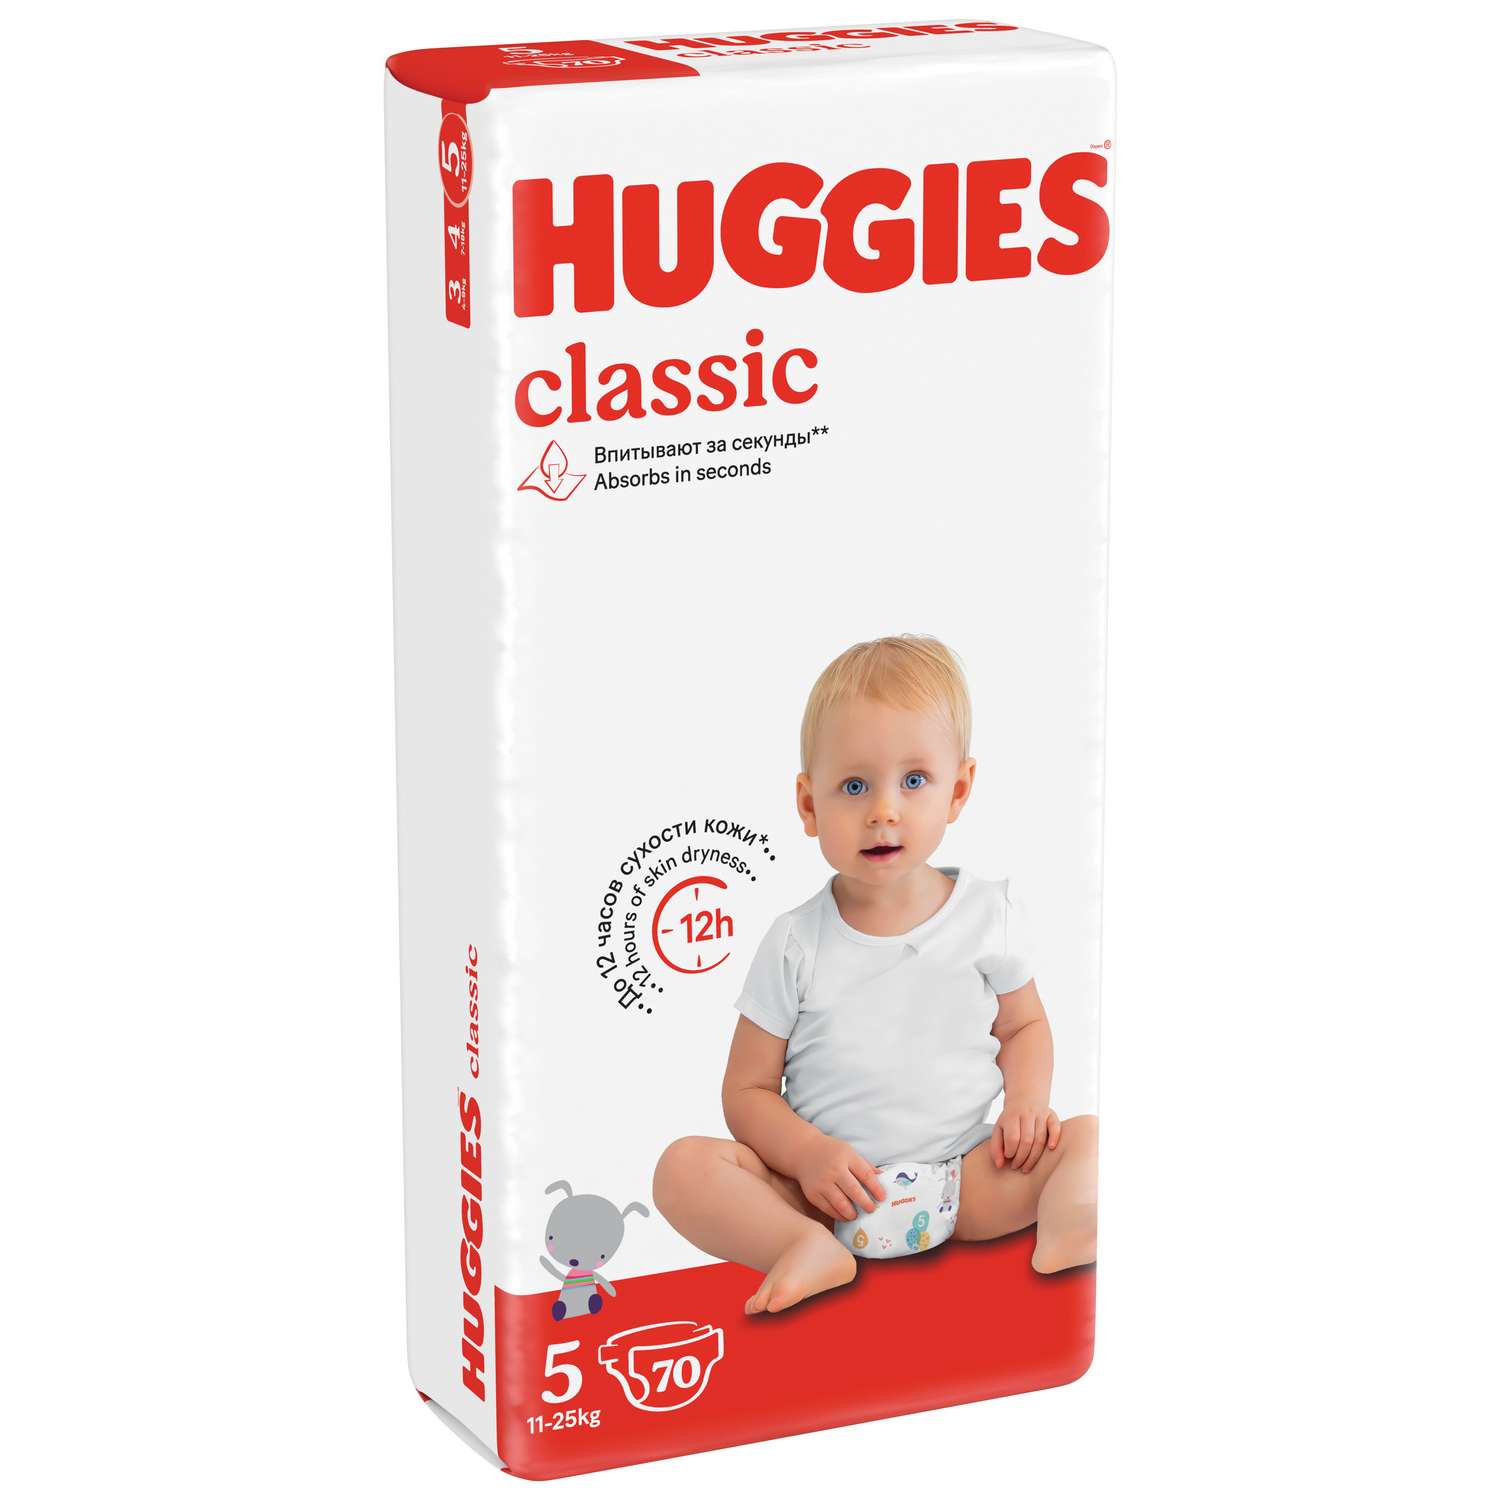 Подгузники Huggies Classic 5 11-25кг 70шт - фото 3